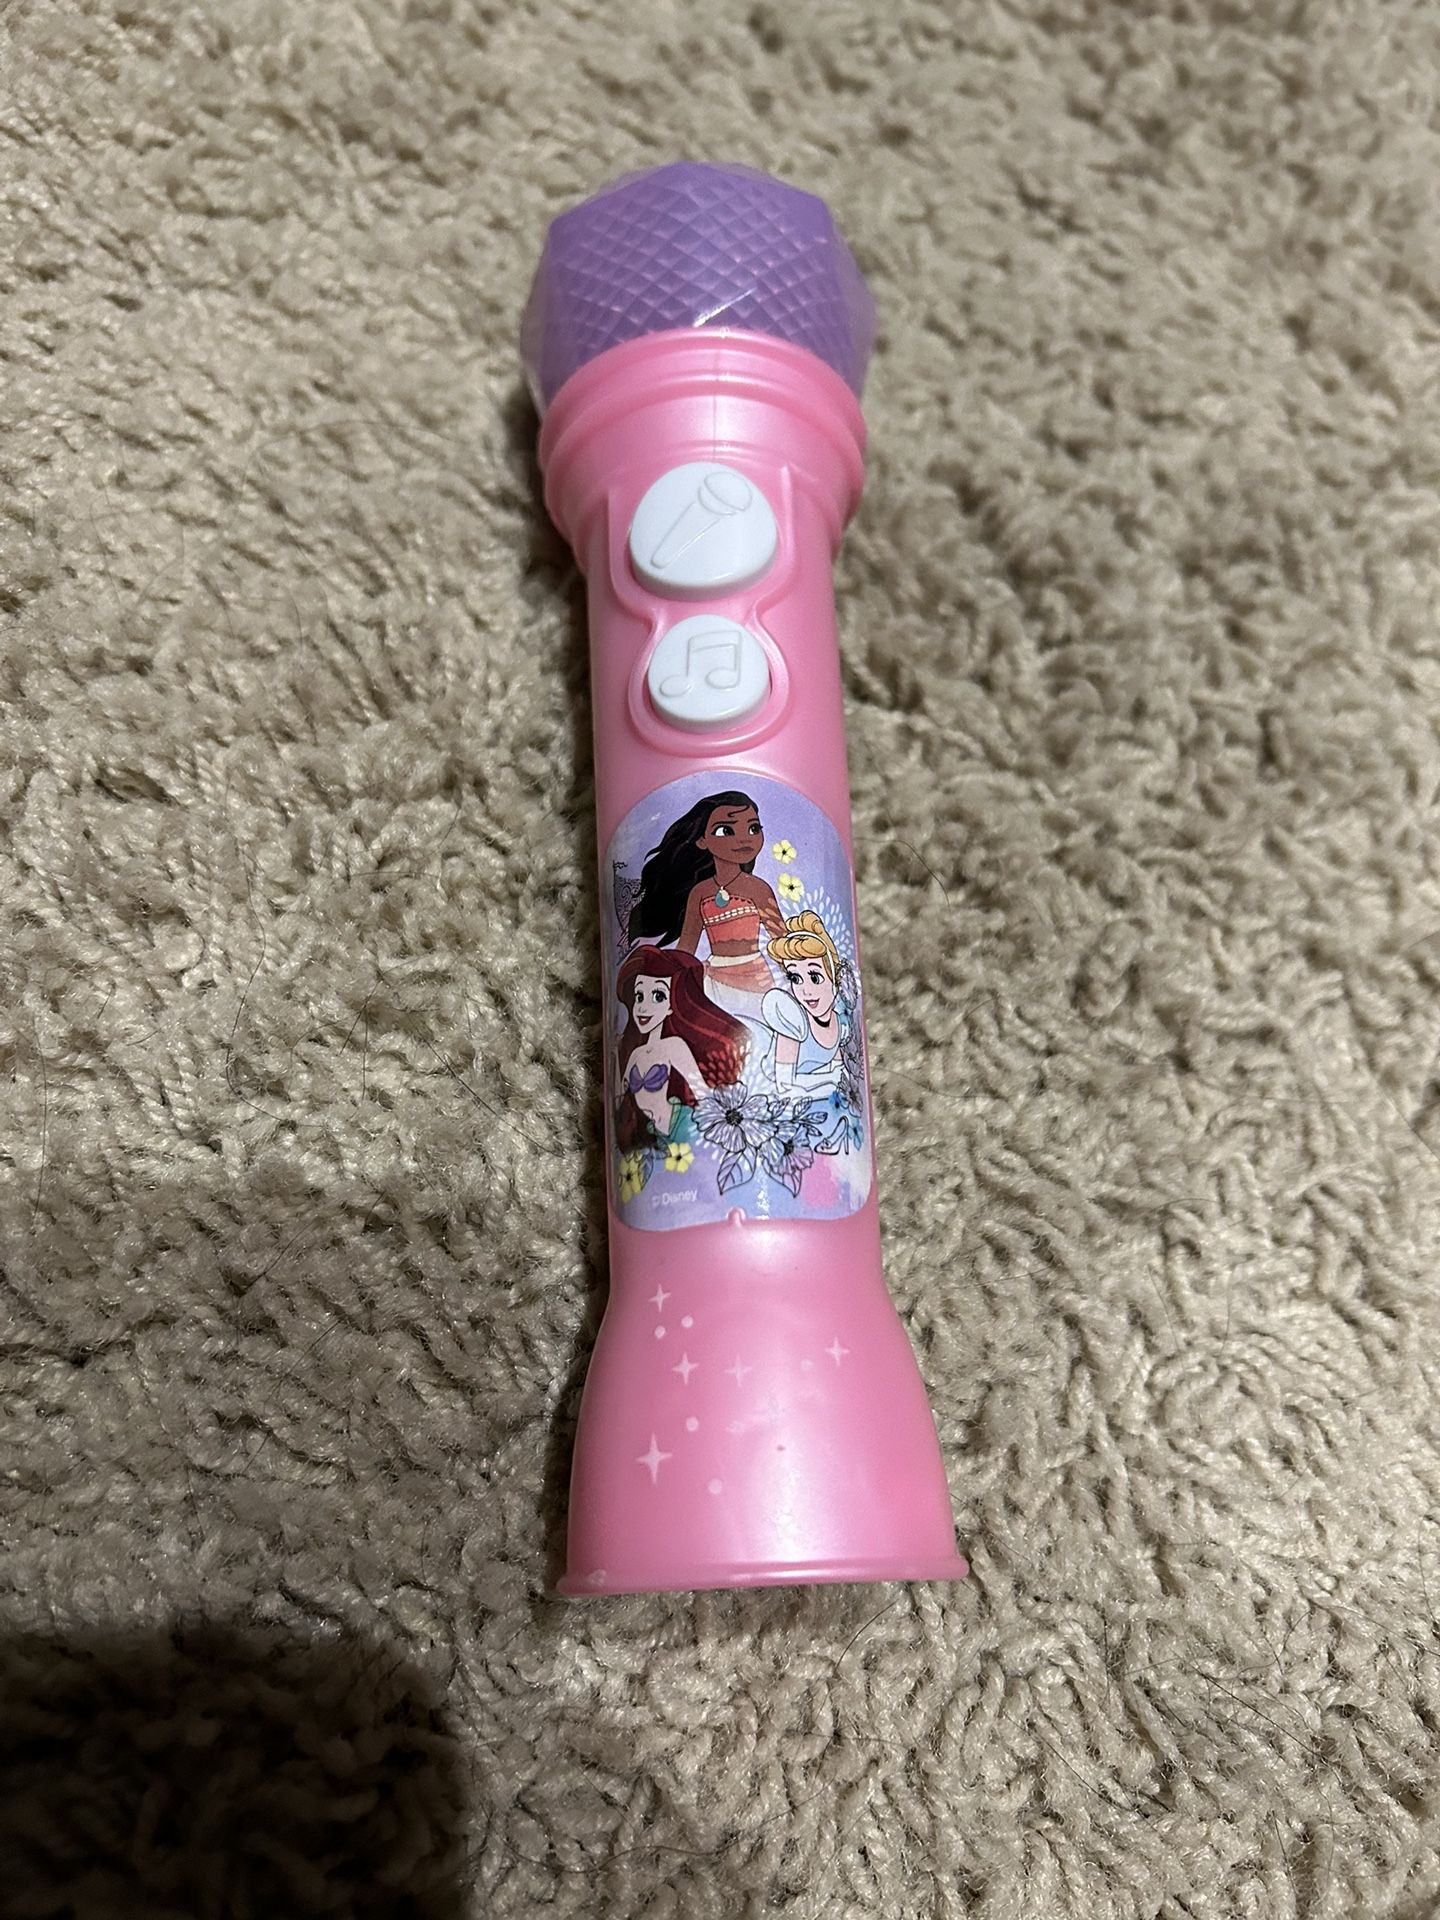 Disney Princess Toy Microphone